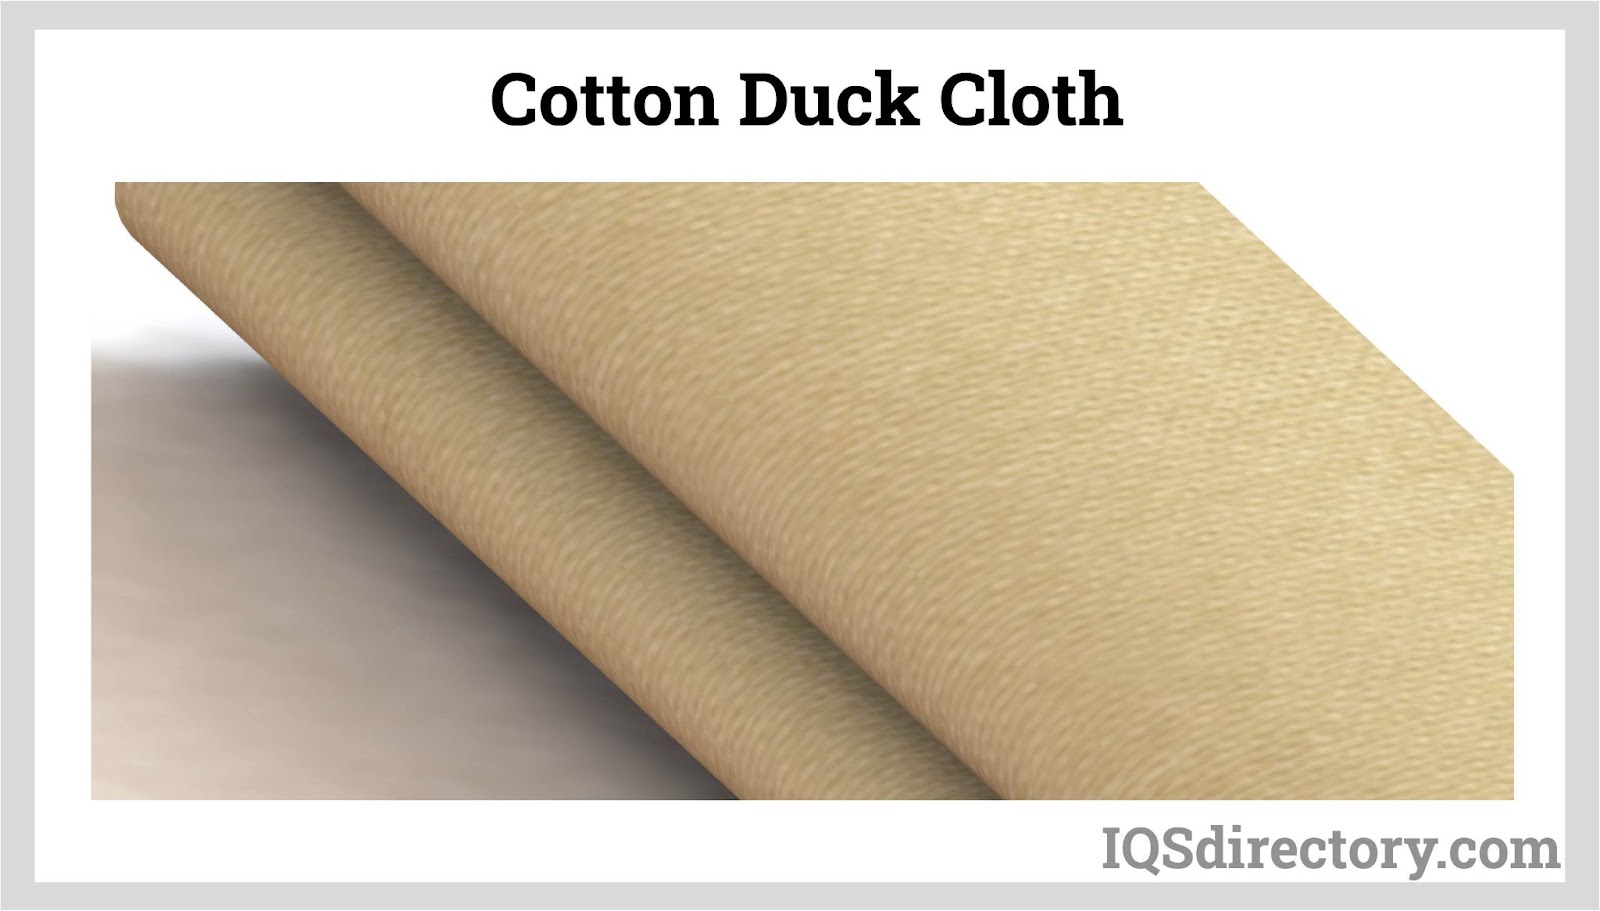 Cotton Duck Cloth